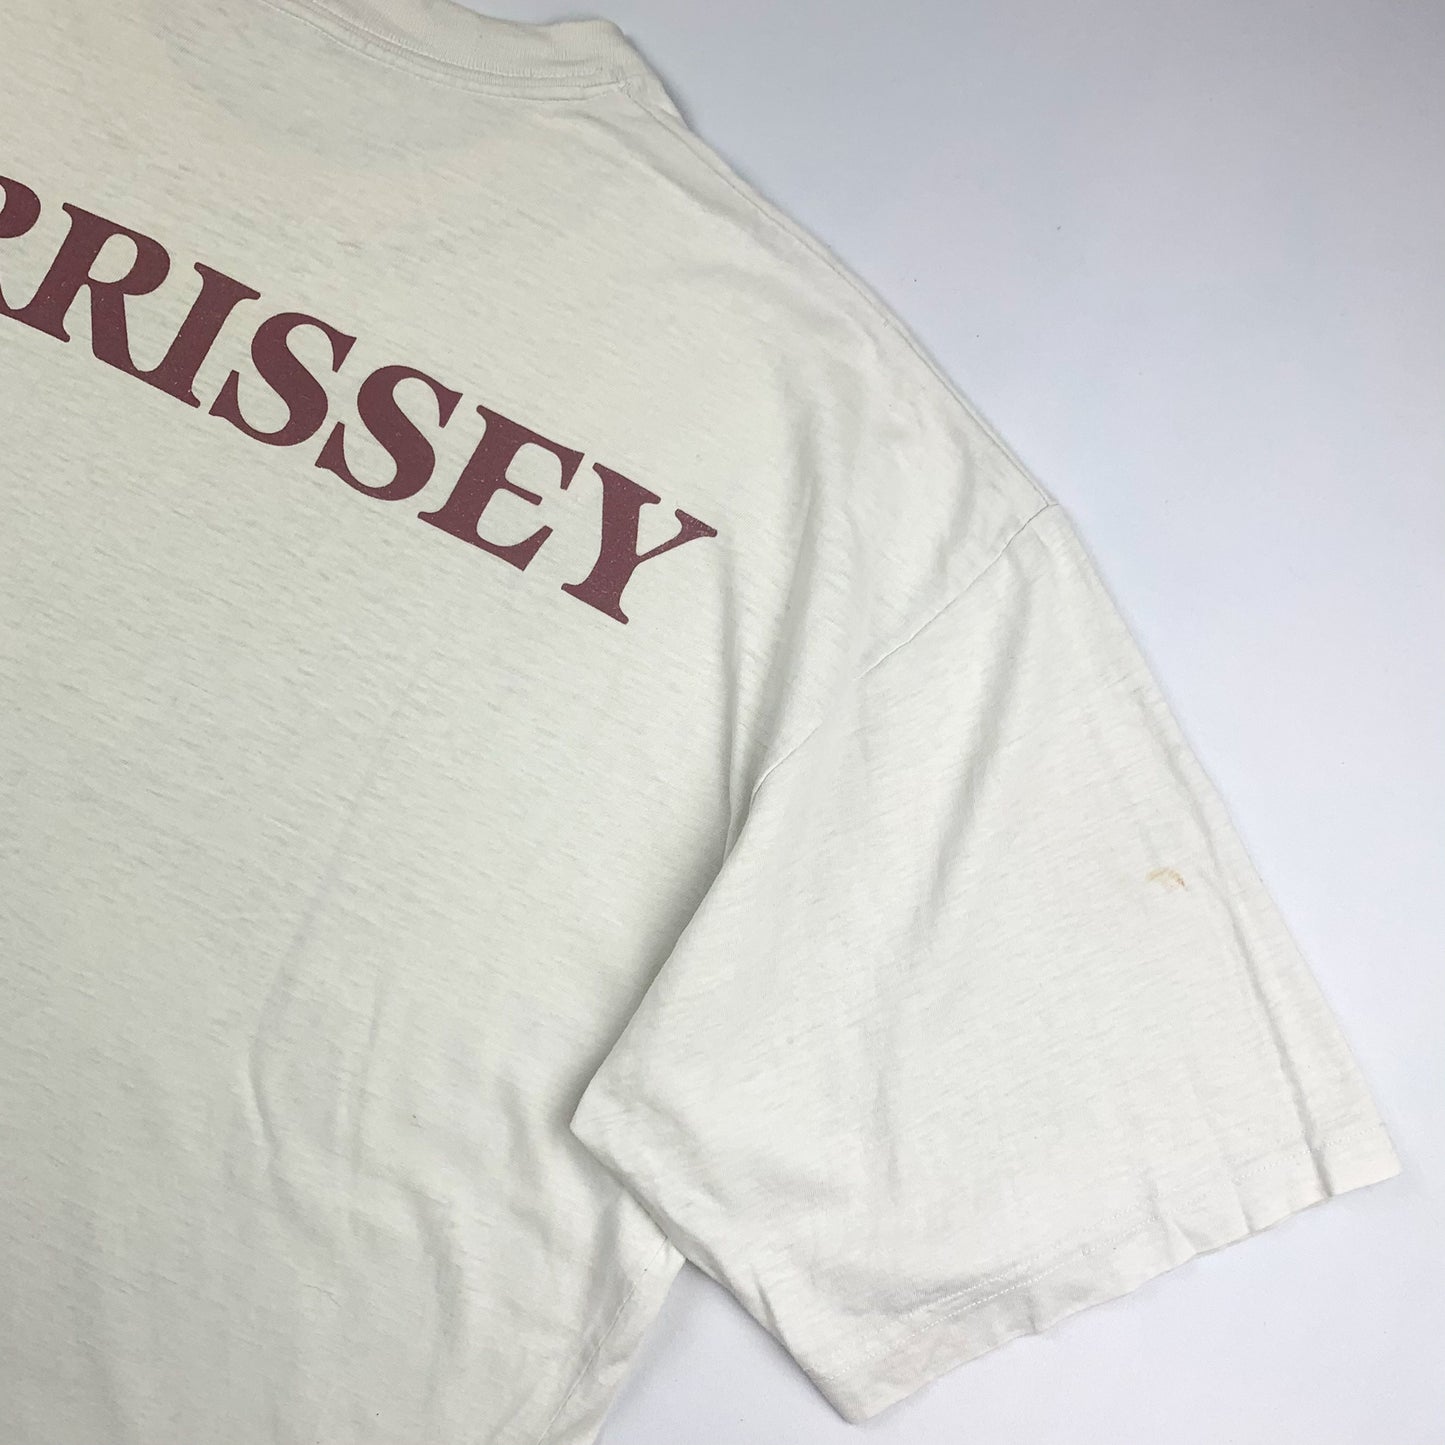 1991 Morrissey (XL)